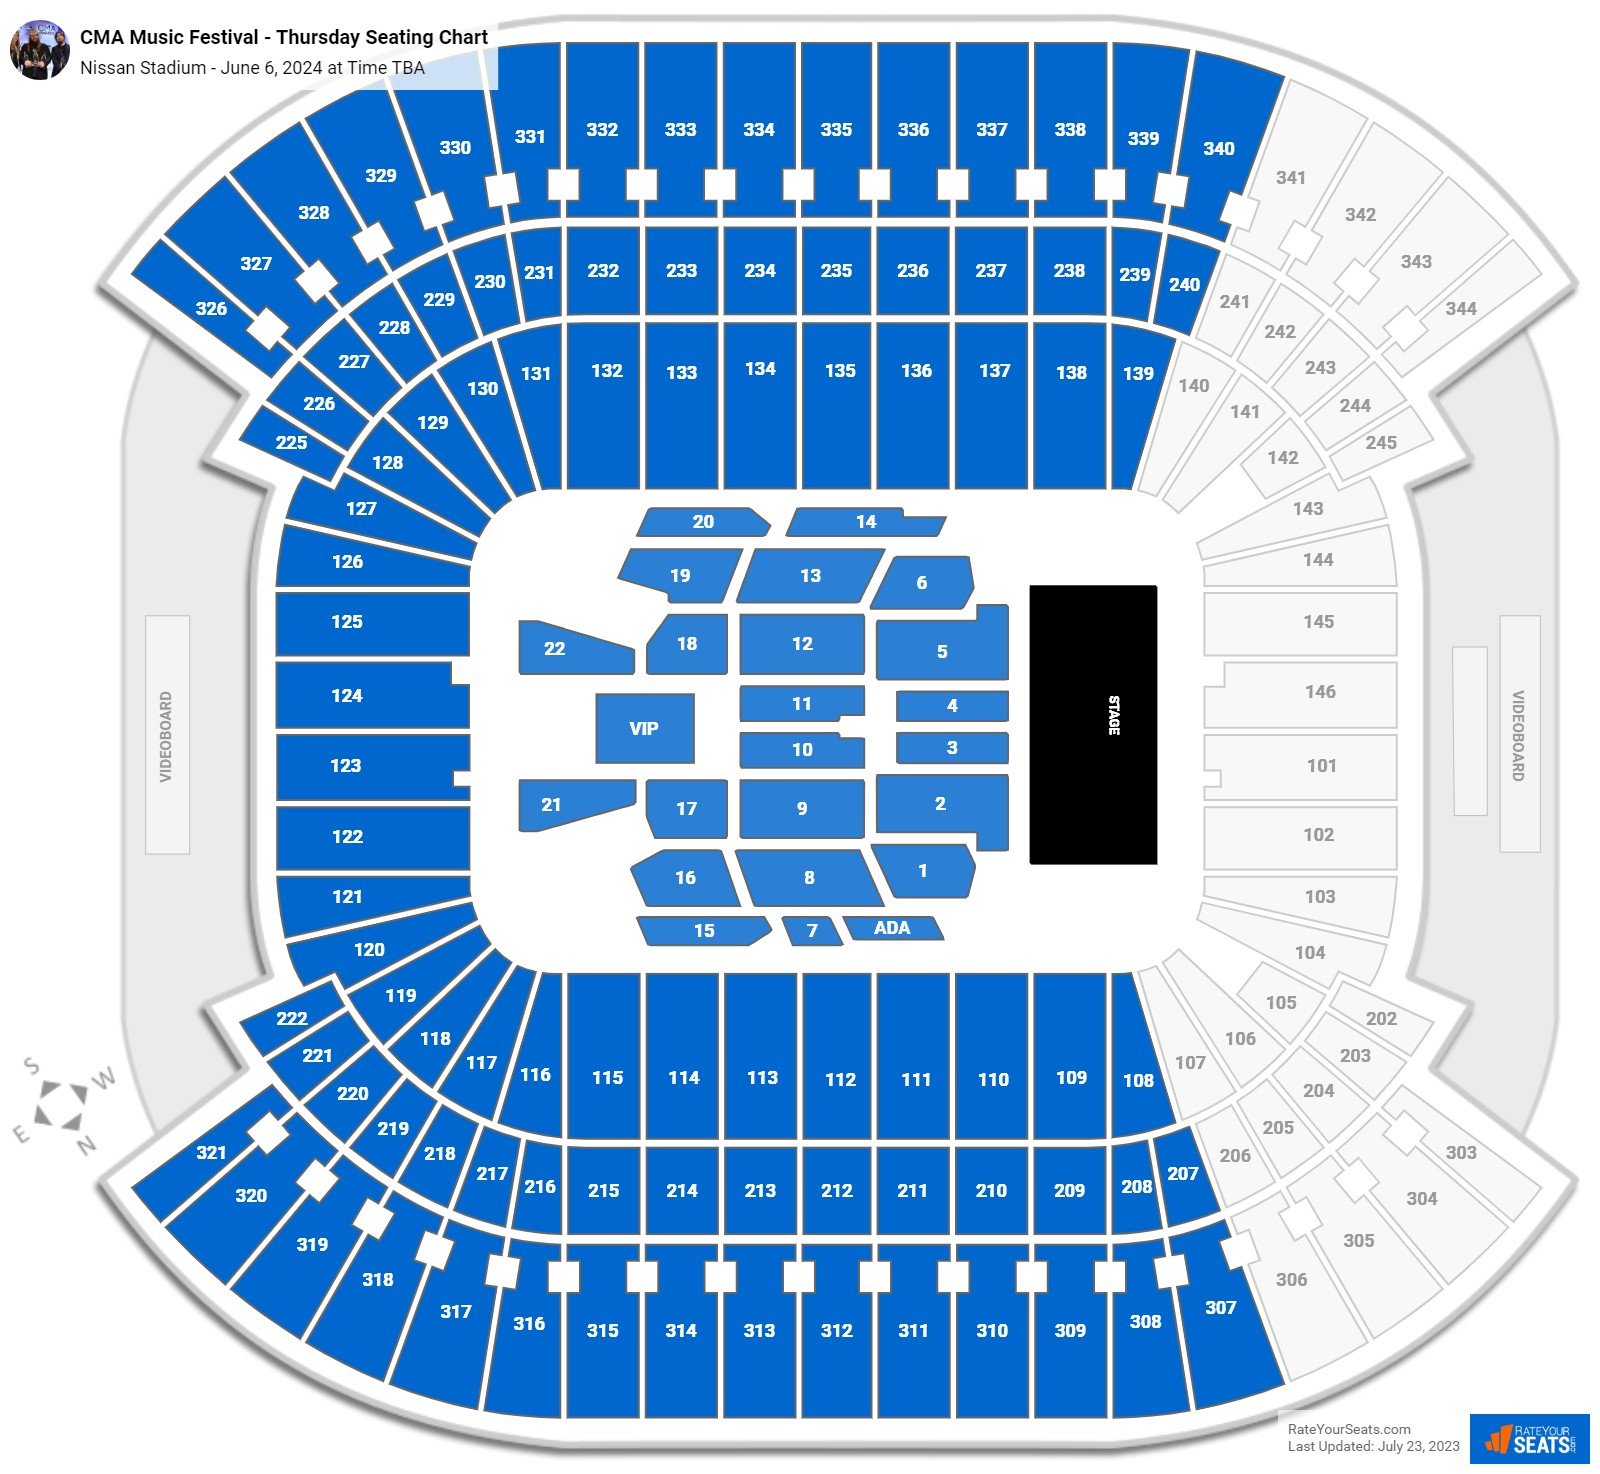 Nissan Stadium Concert Seating Chart Rateyourseats Com